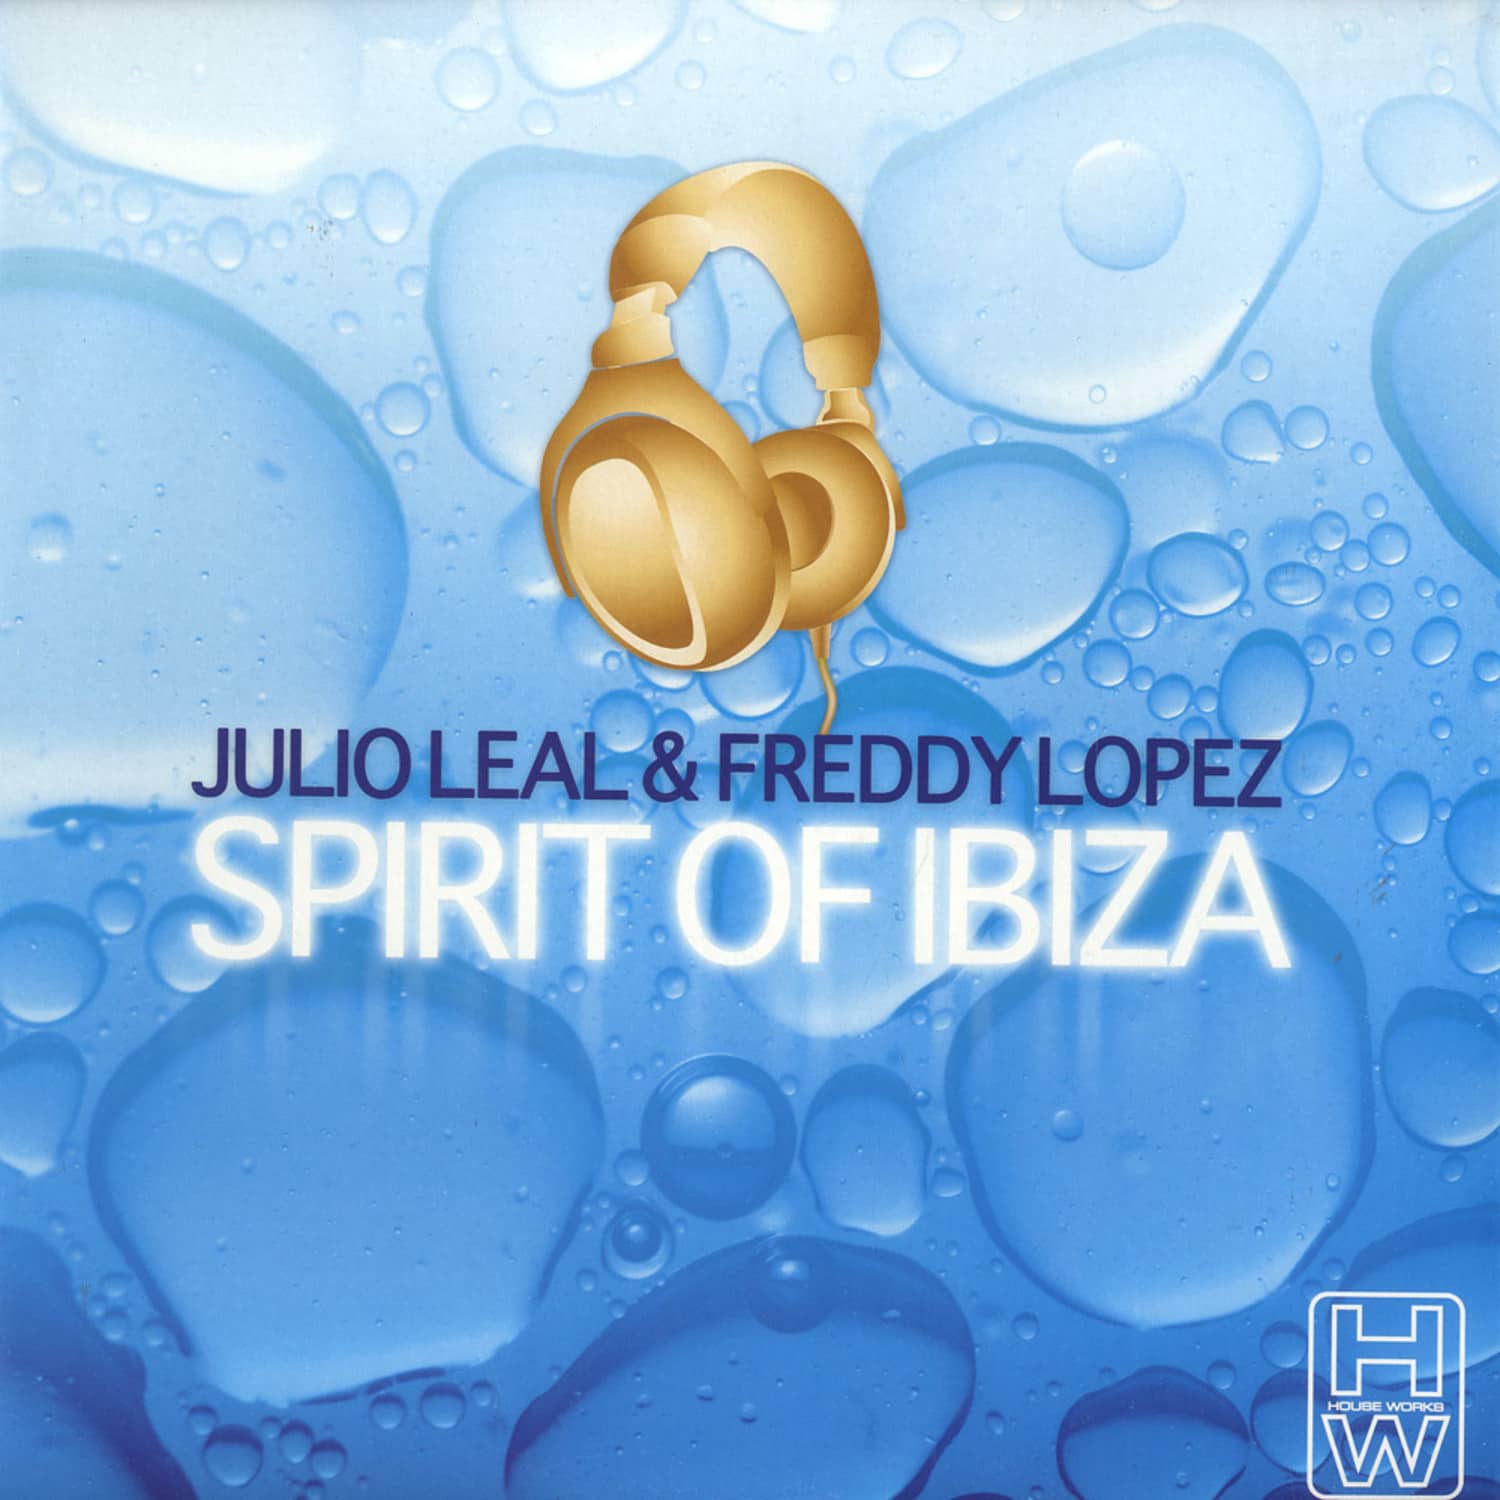 Julio Leal & Freddy Lopez - SPIRIT OF IBIZA